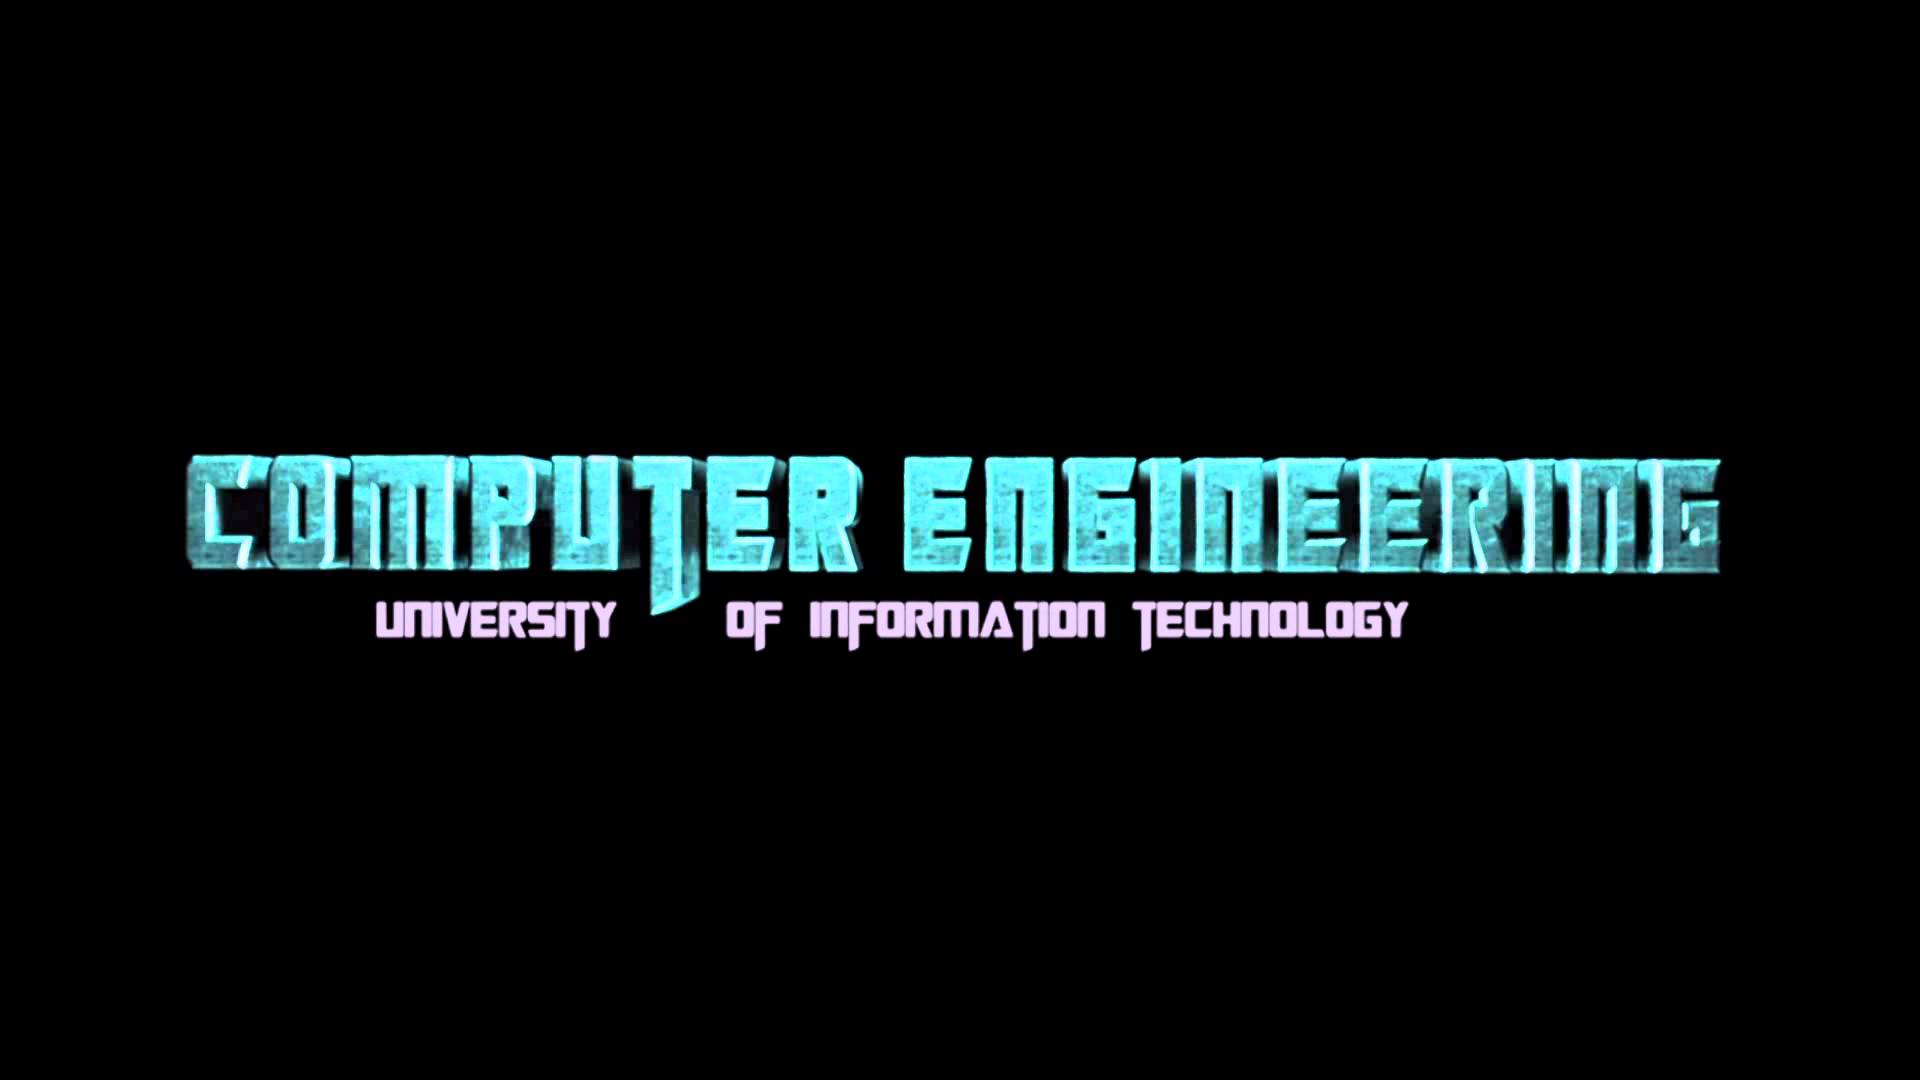 Computer Engineer Wallpaper Free Computer Engineer Background